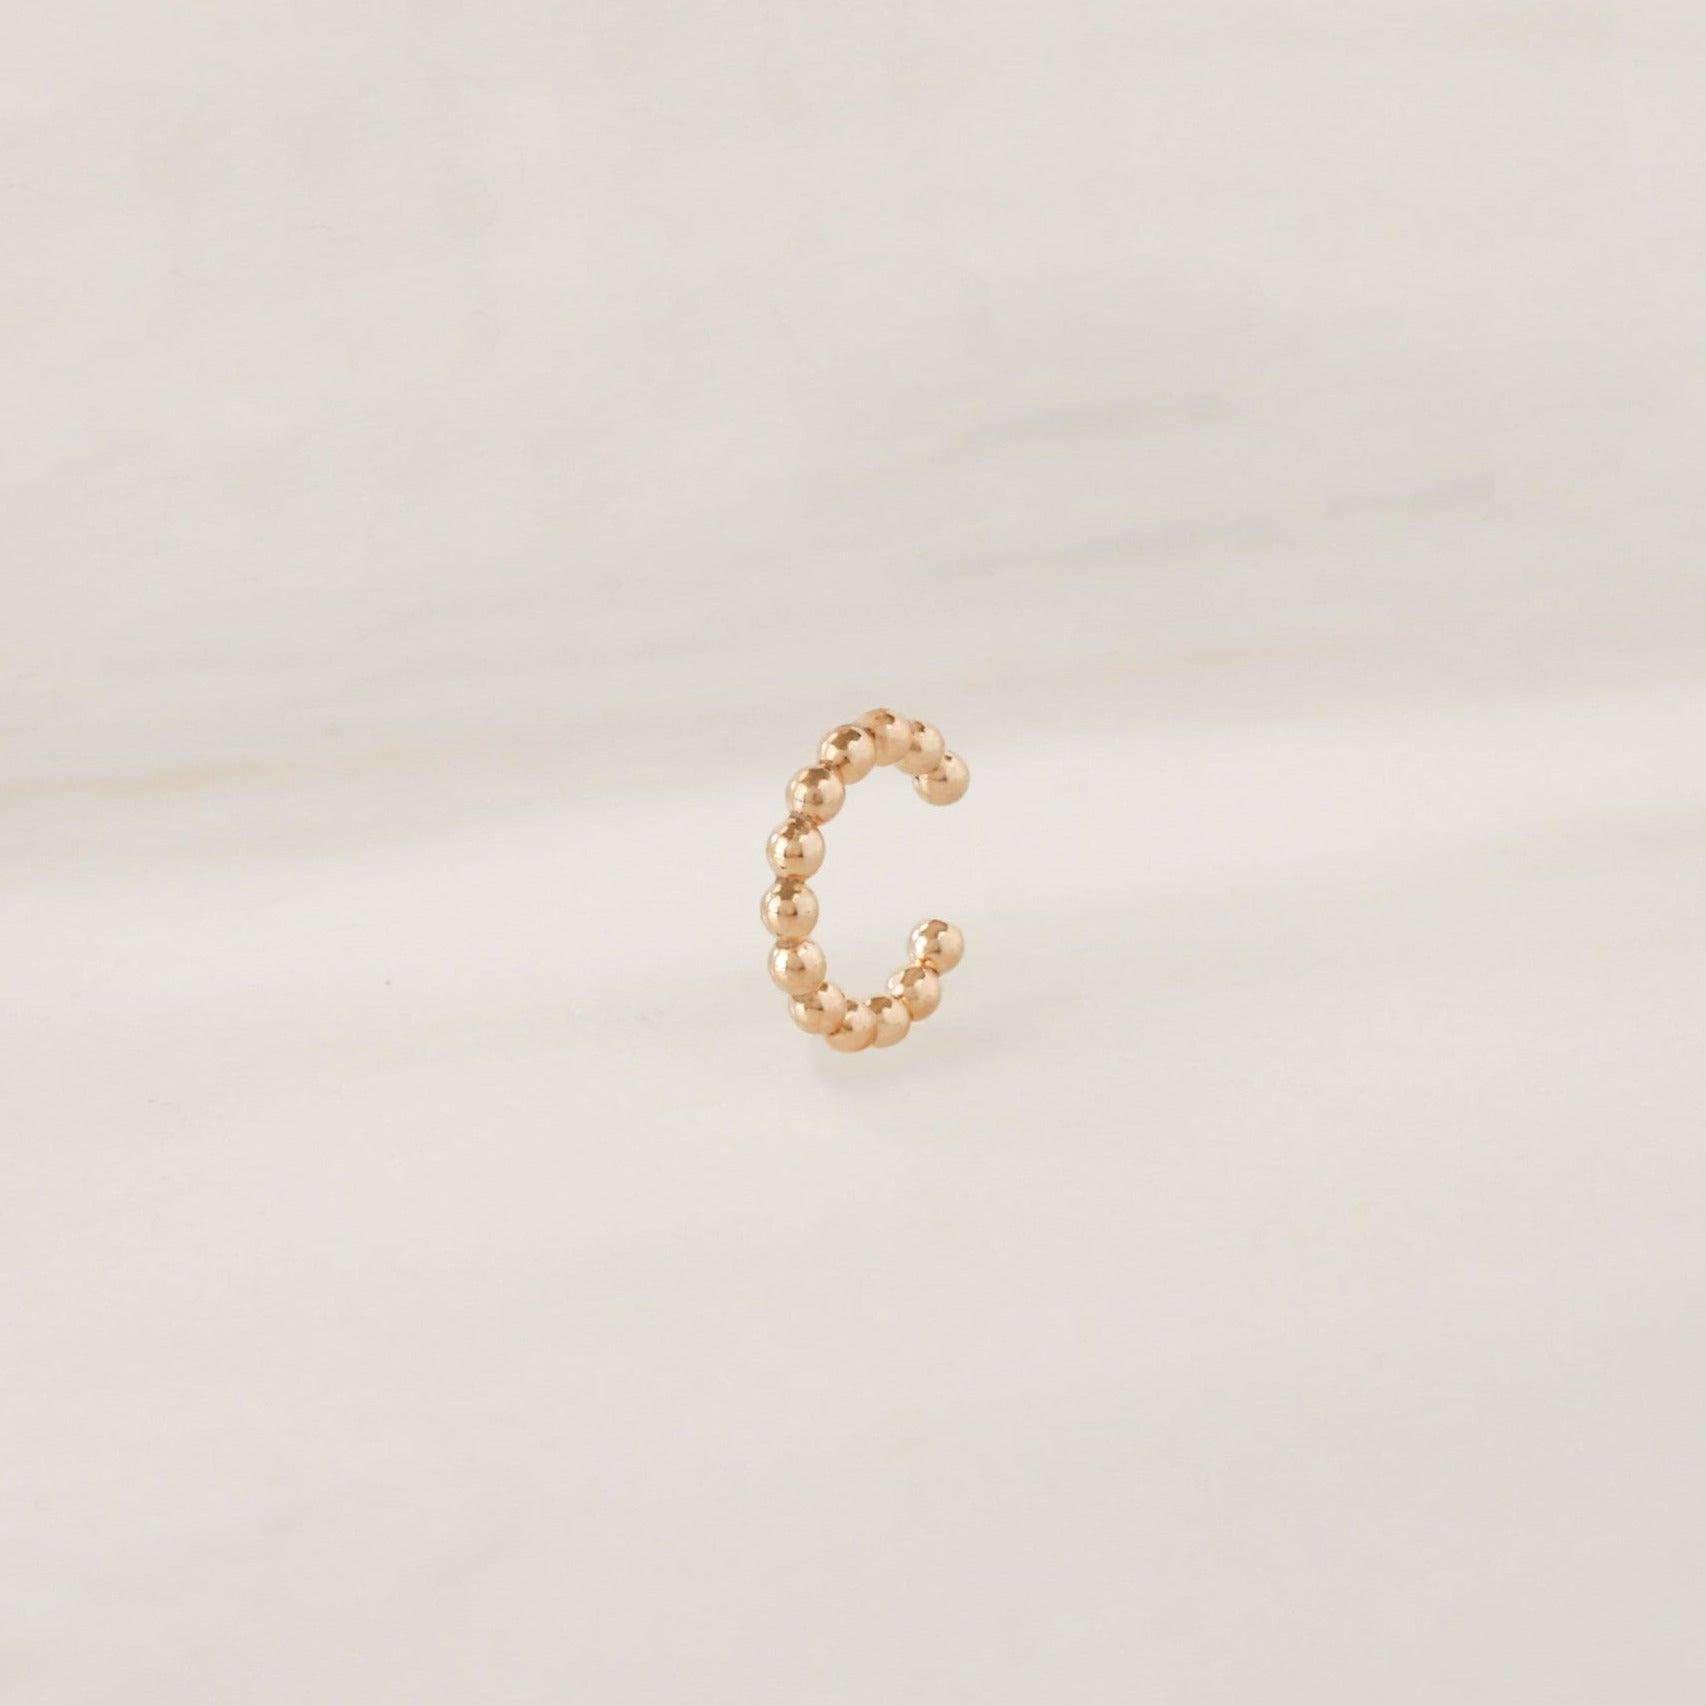 Zoe Ear Cuff - Nolia Jewelry - Meaningful + Sustainably Handcrafted Jewelry